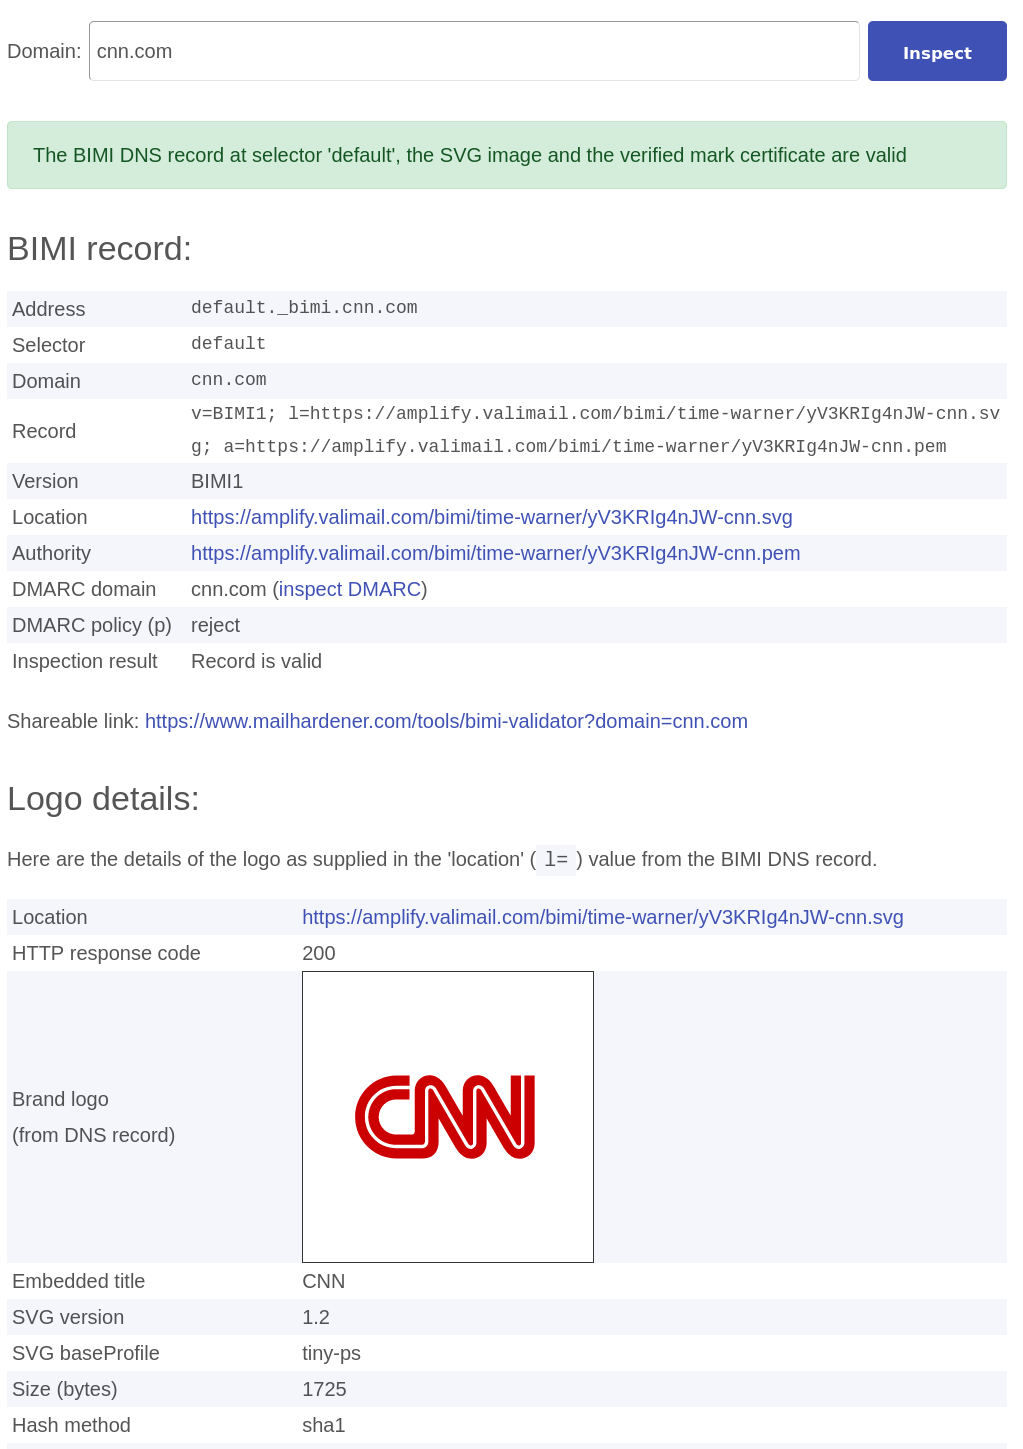 screenshot showing the BIMI validator